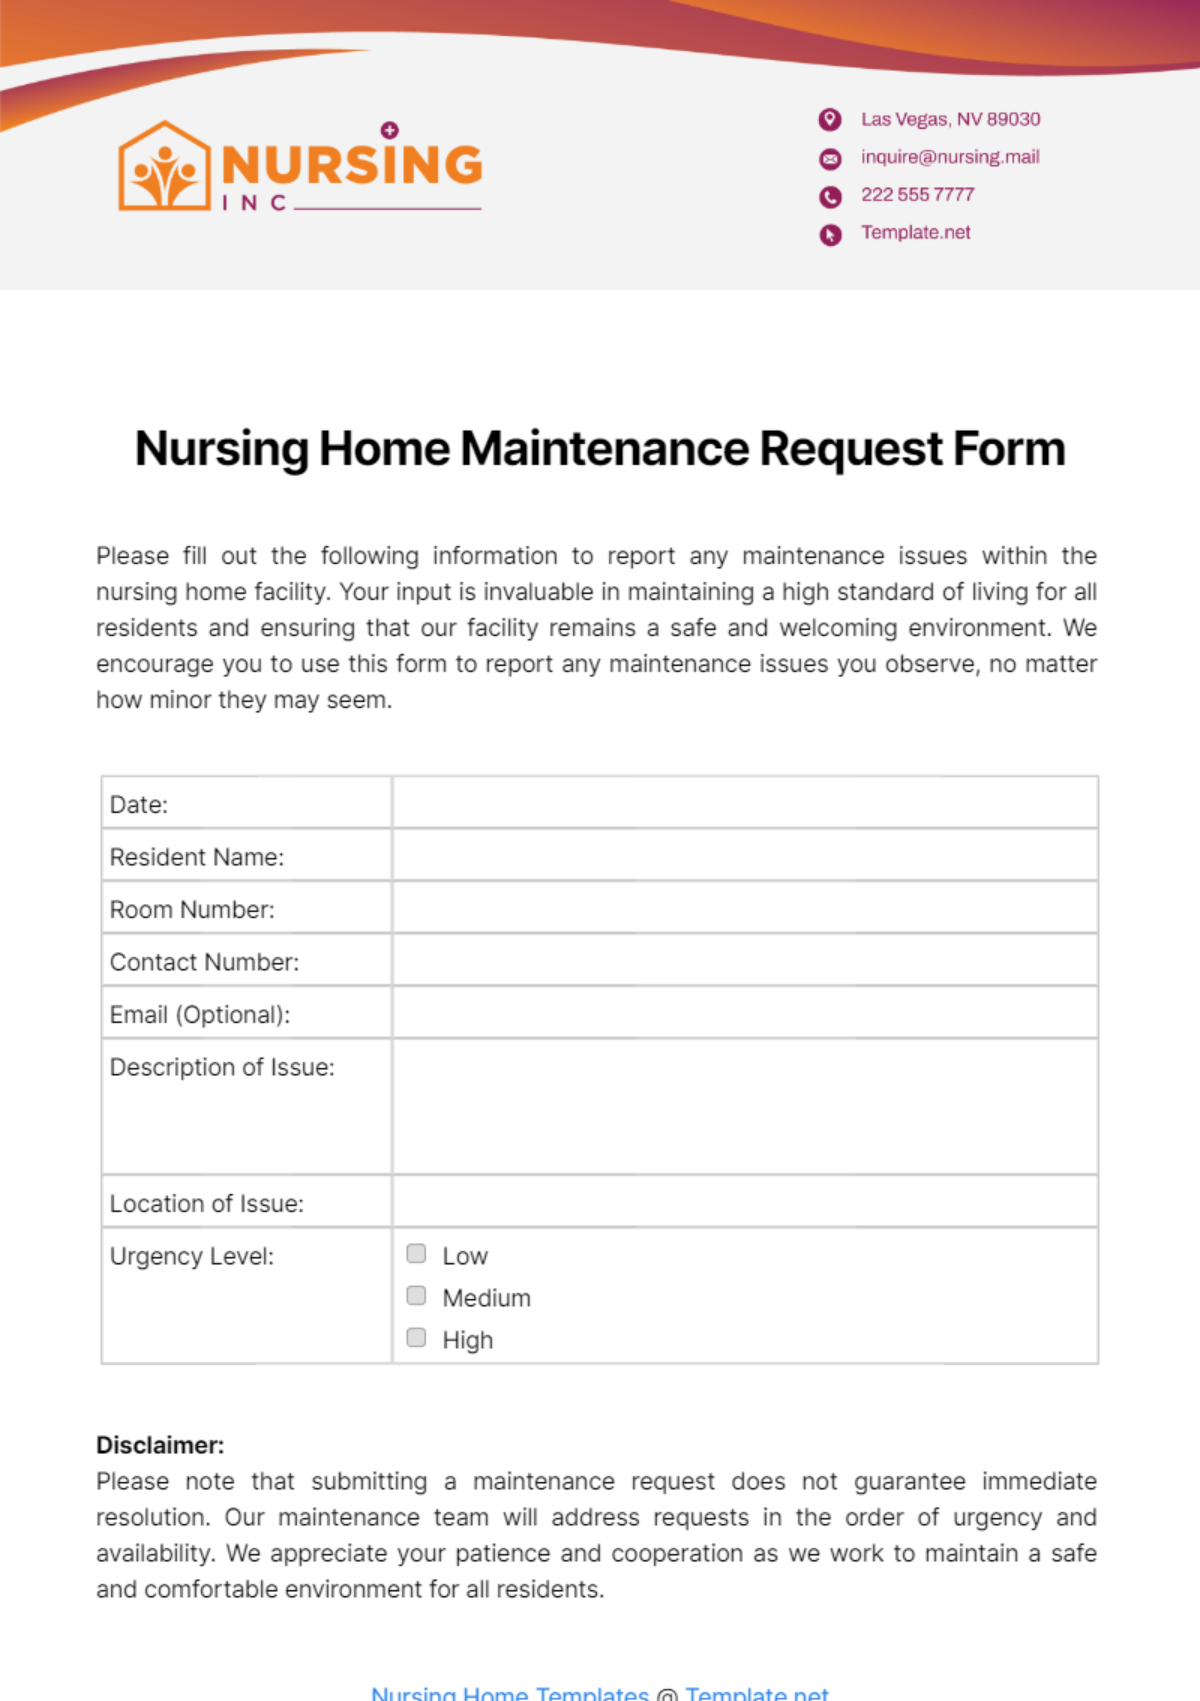 Nursing Home Maintenance Request Form Template